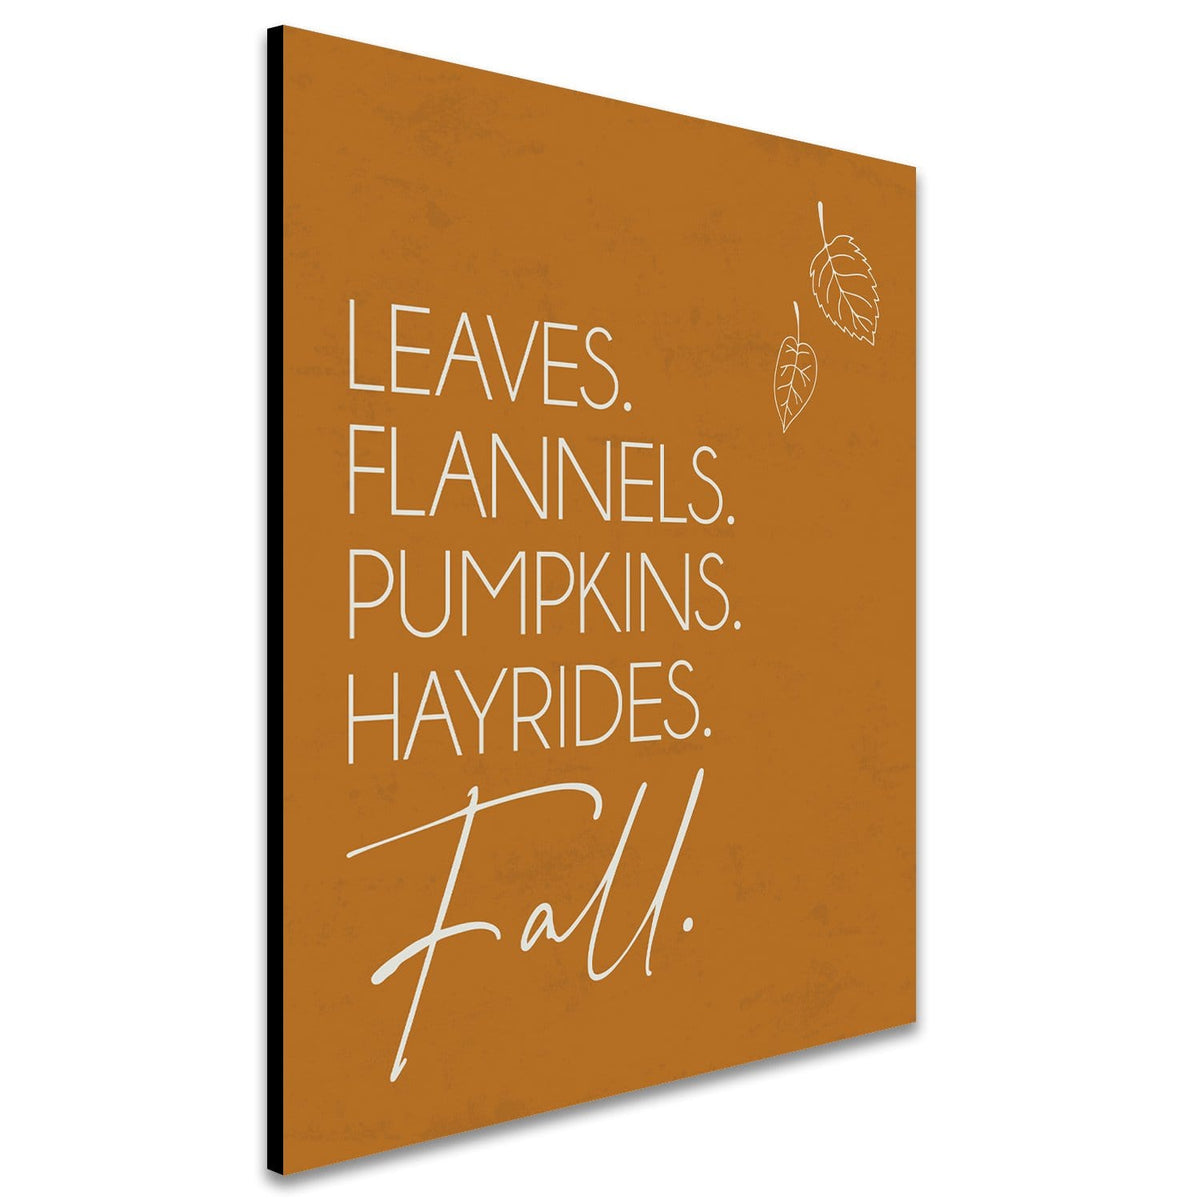 Leaves, flannels, pumpkins, hayrides, fall sign